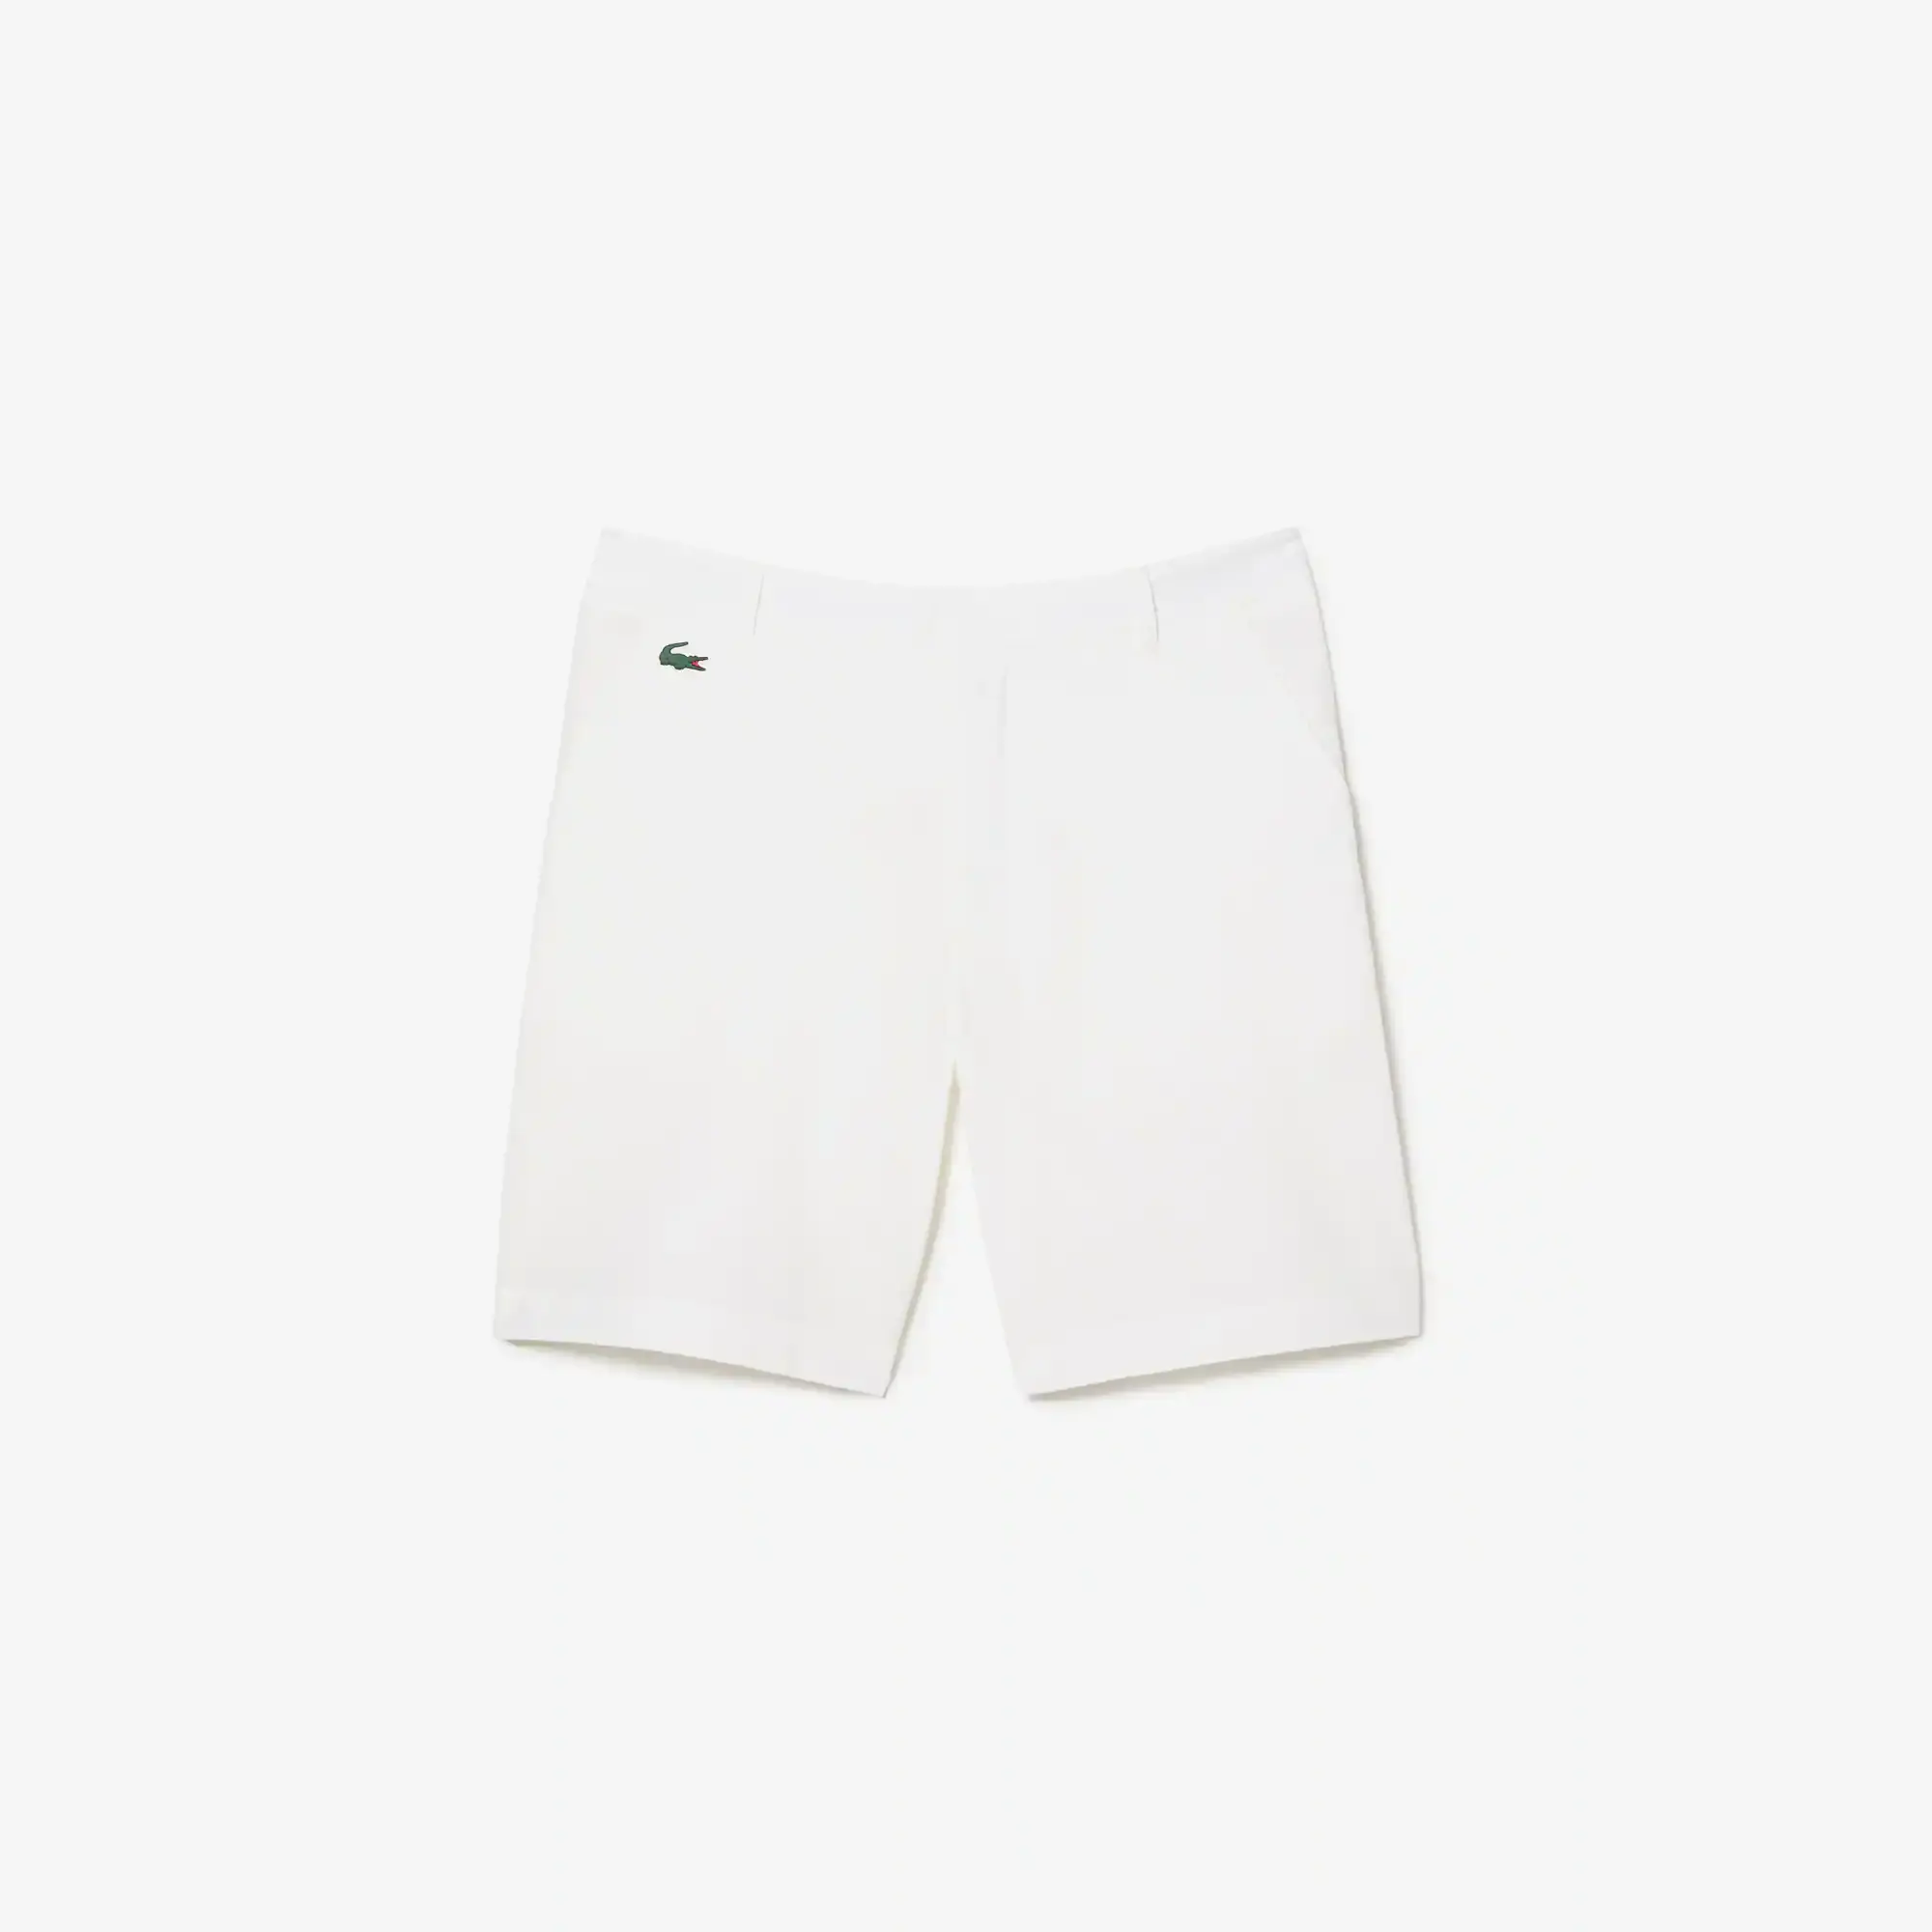 Lacoste Men’s SPORT Lightweight Stretch Golf Shorts. 2